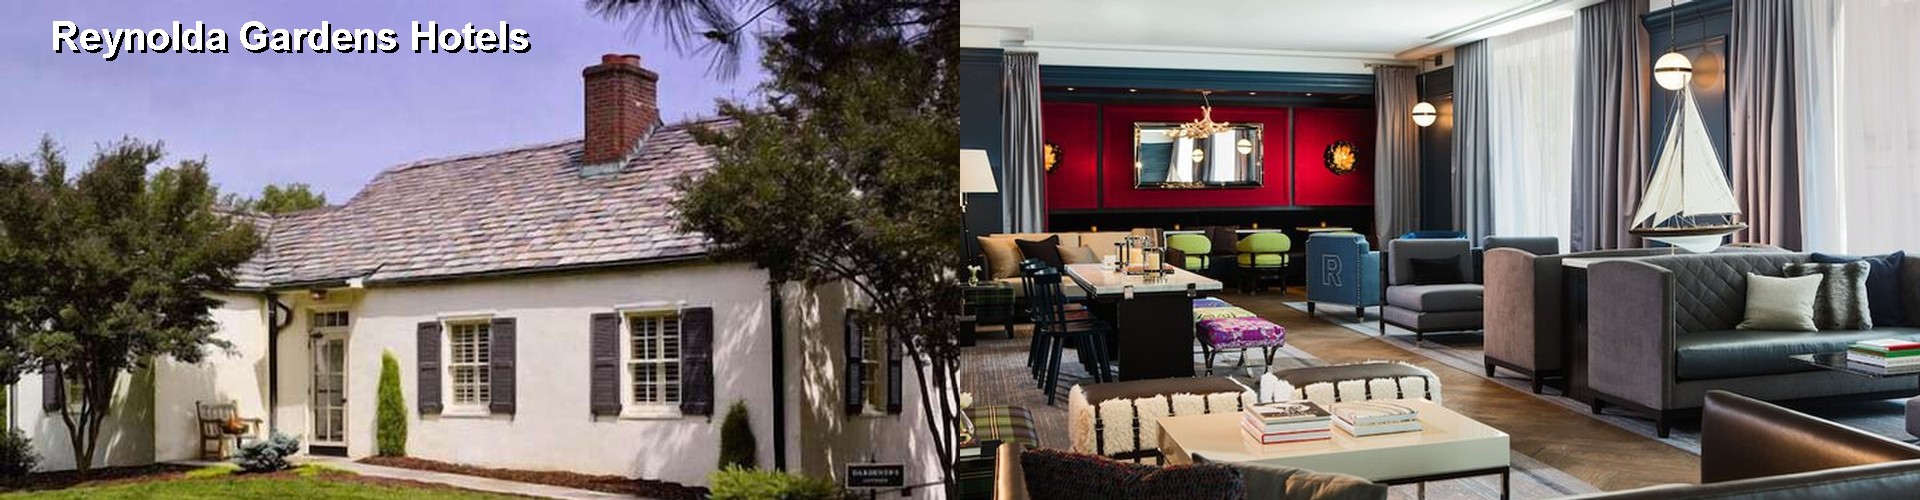 5 Best Hotels near Reynolda Gardens